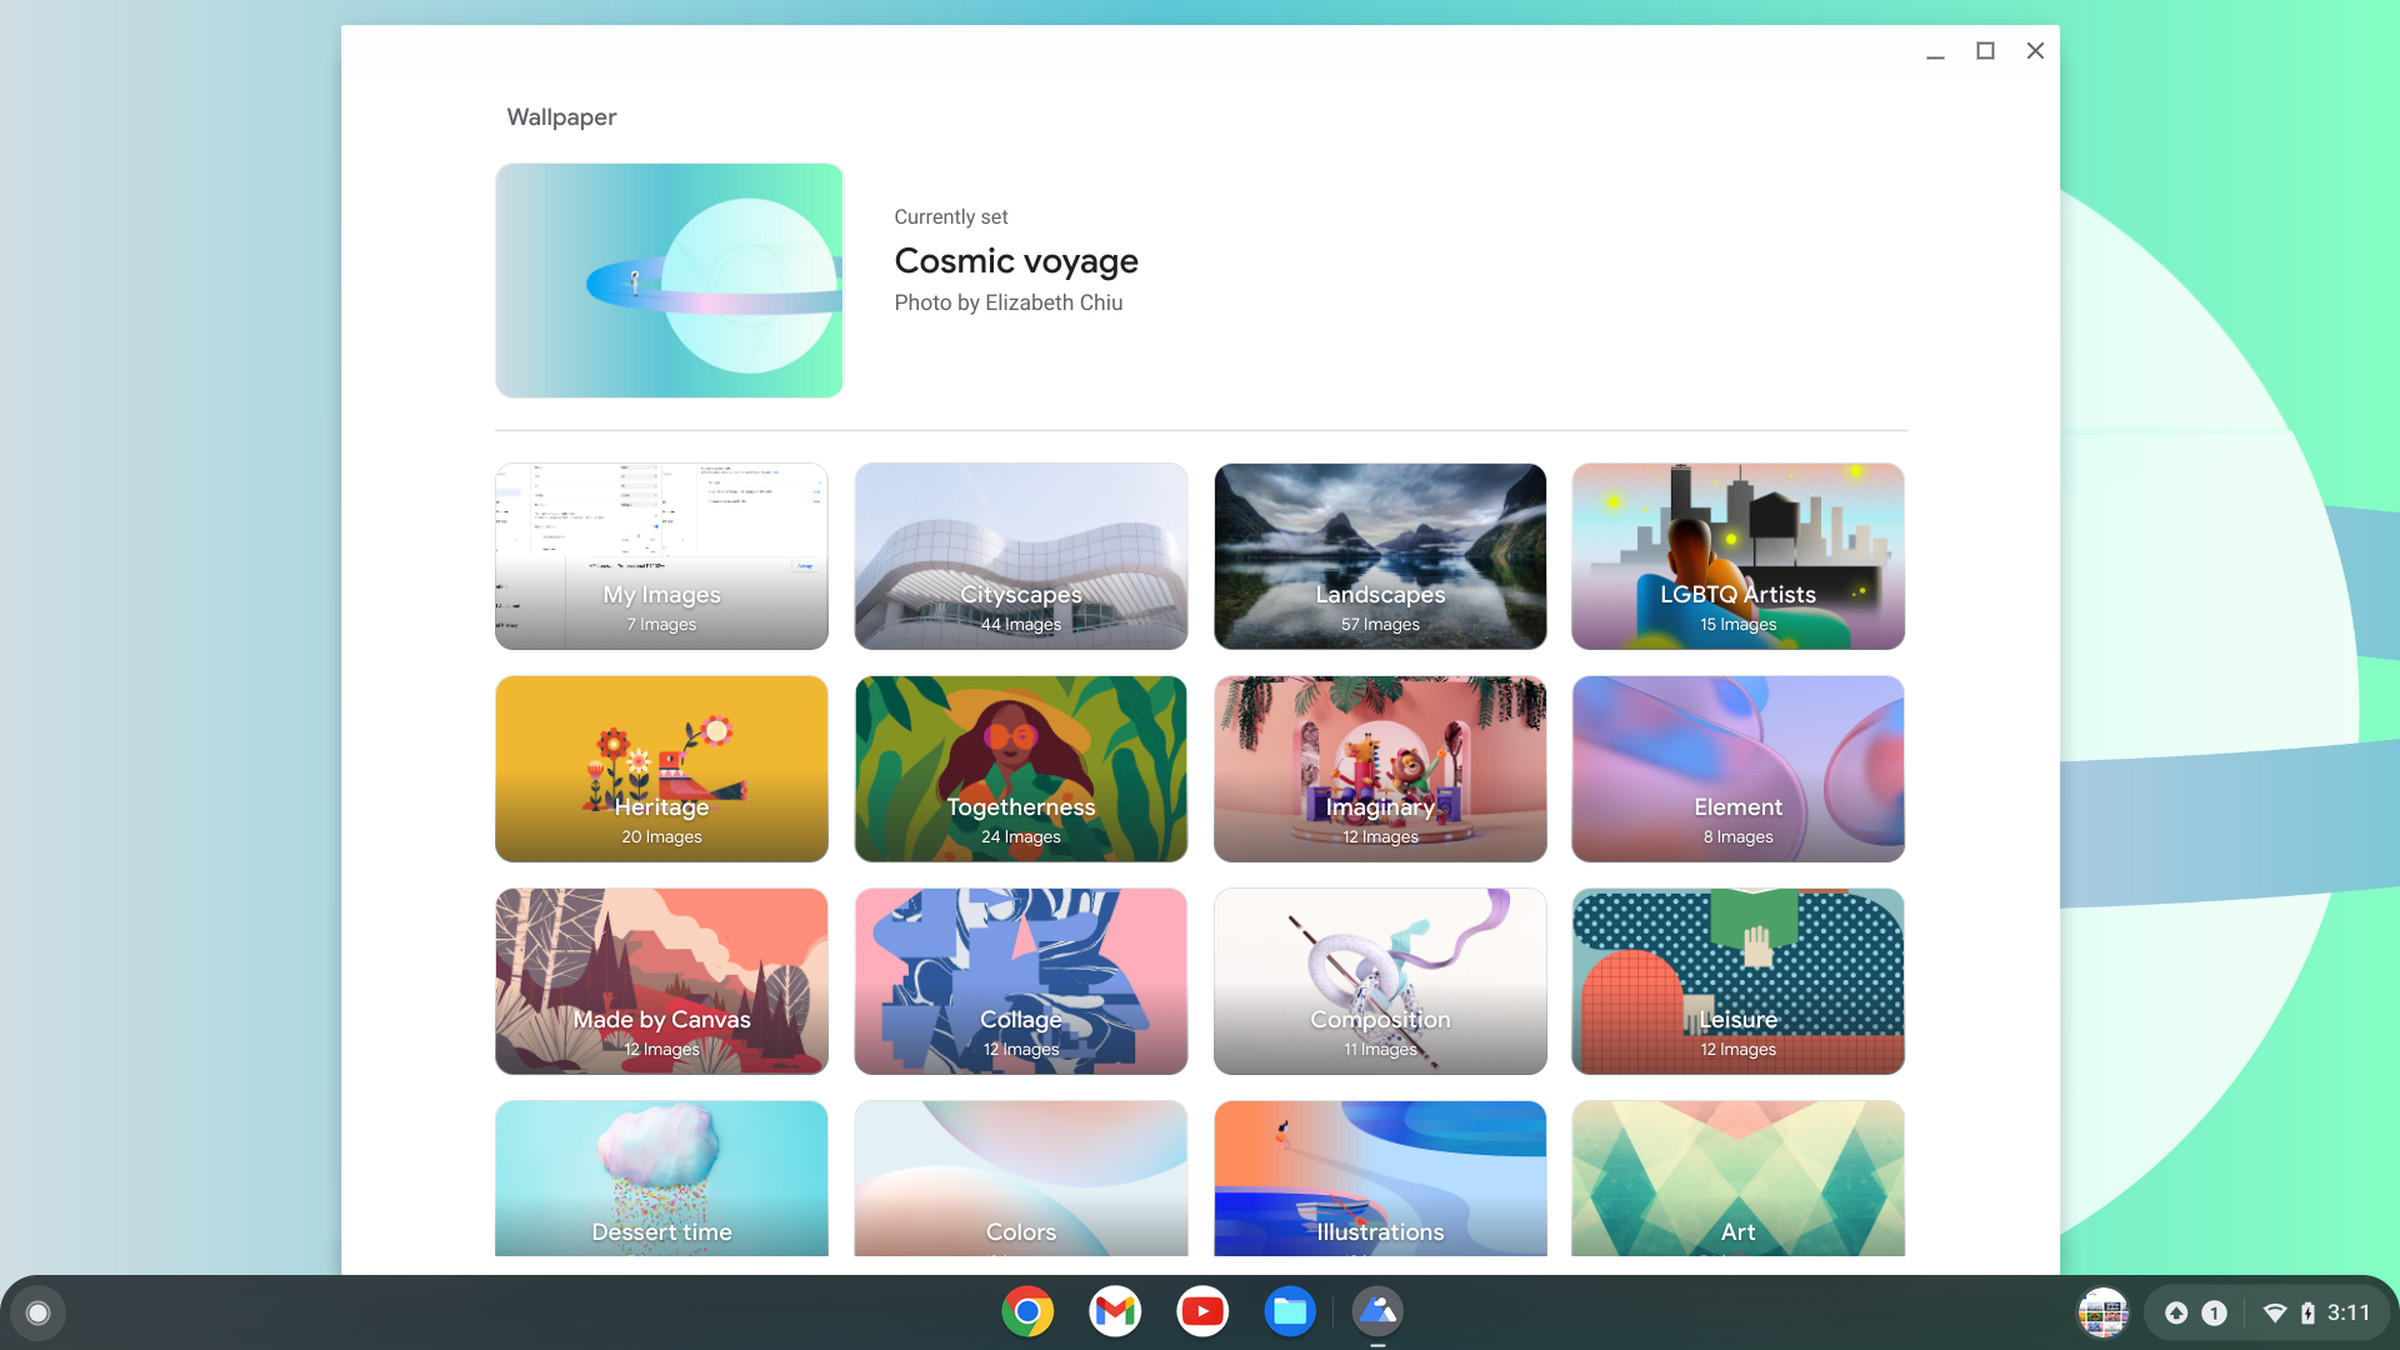 ChromeOS wallpaper selection